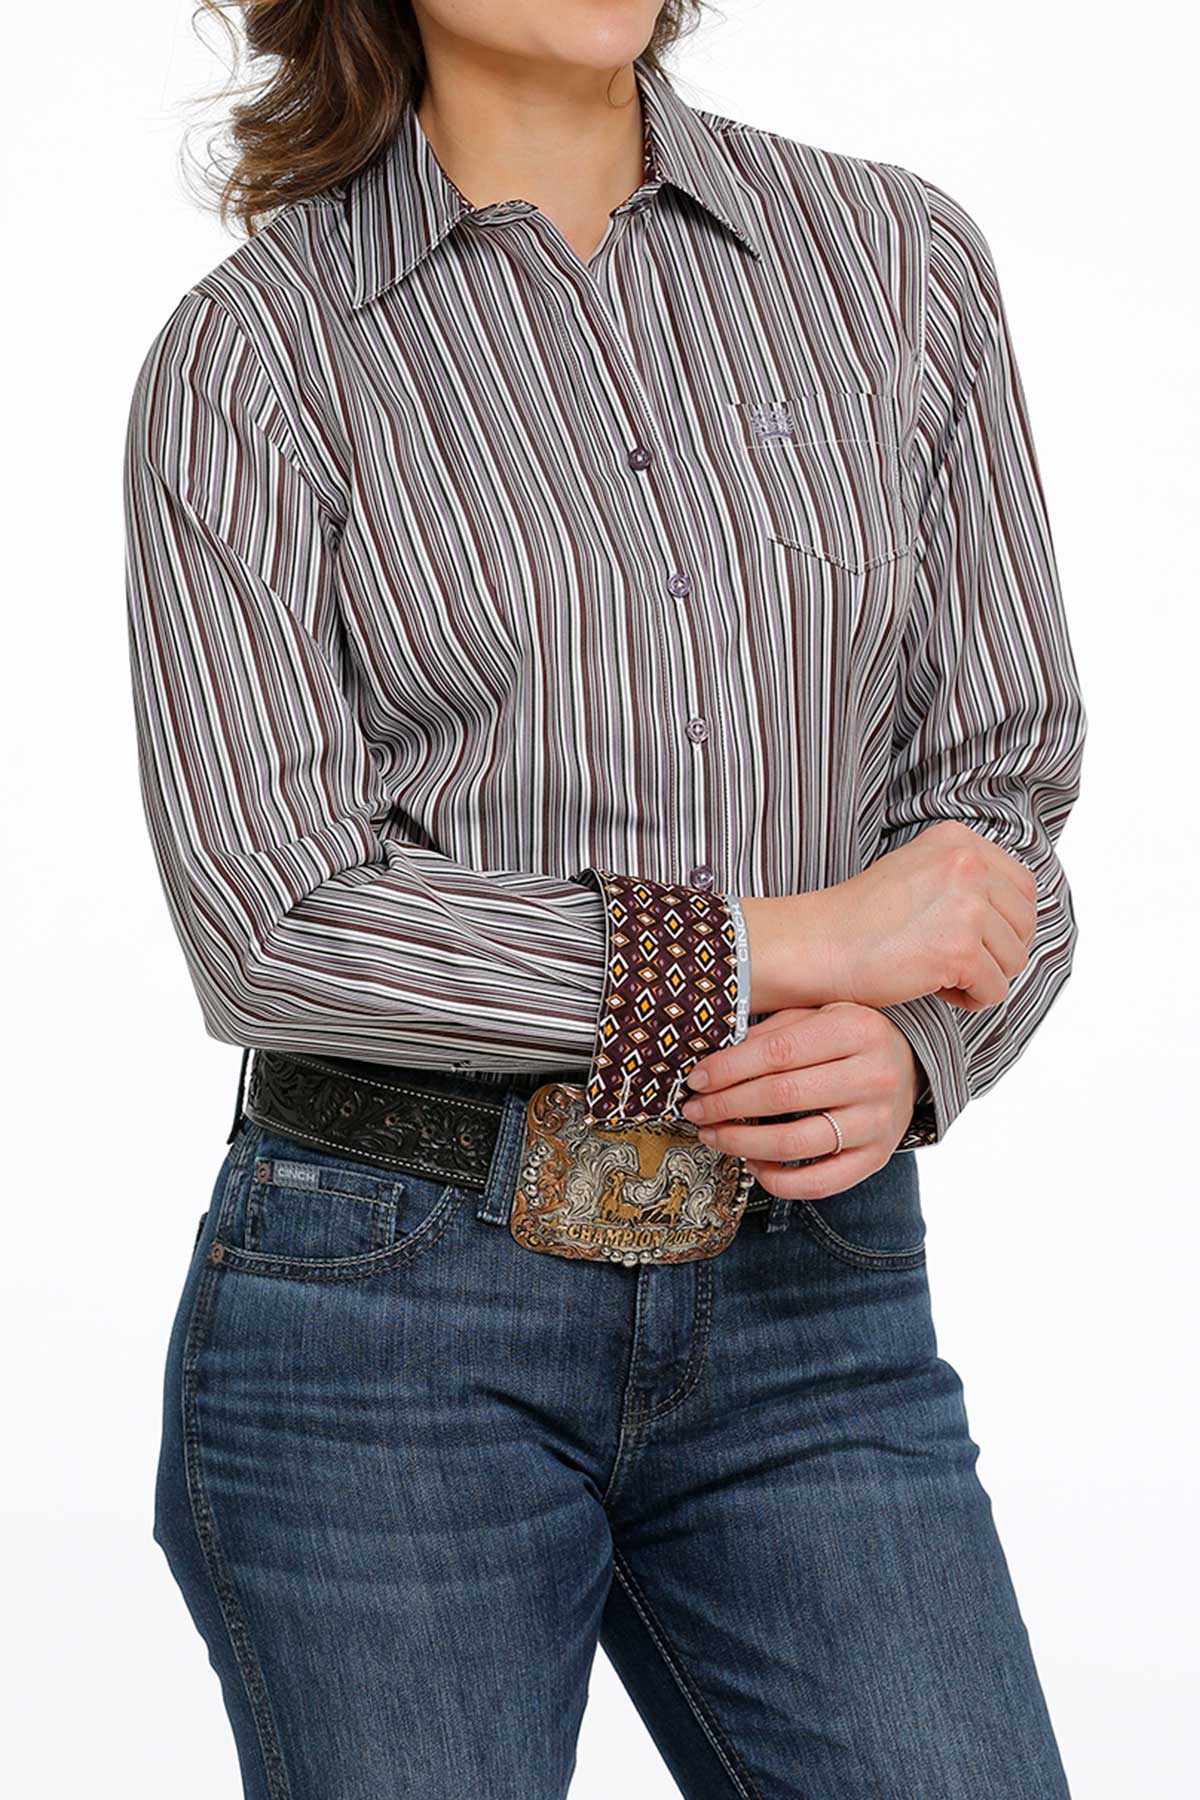 CINCH Women's Striped Button-Down Western Shirt